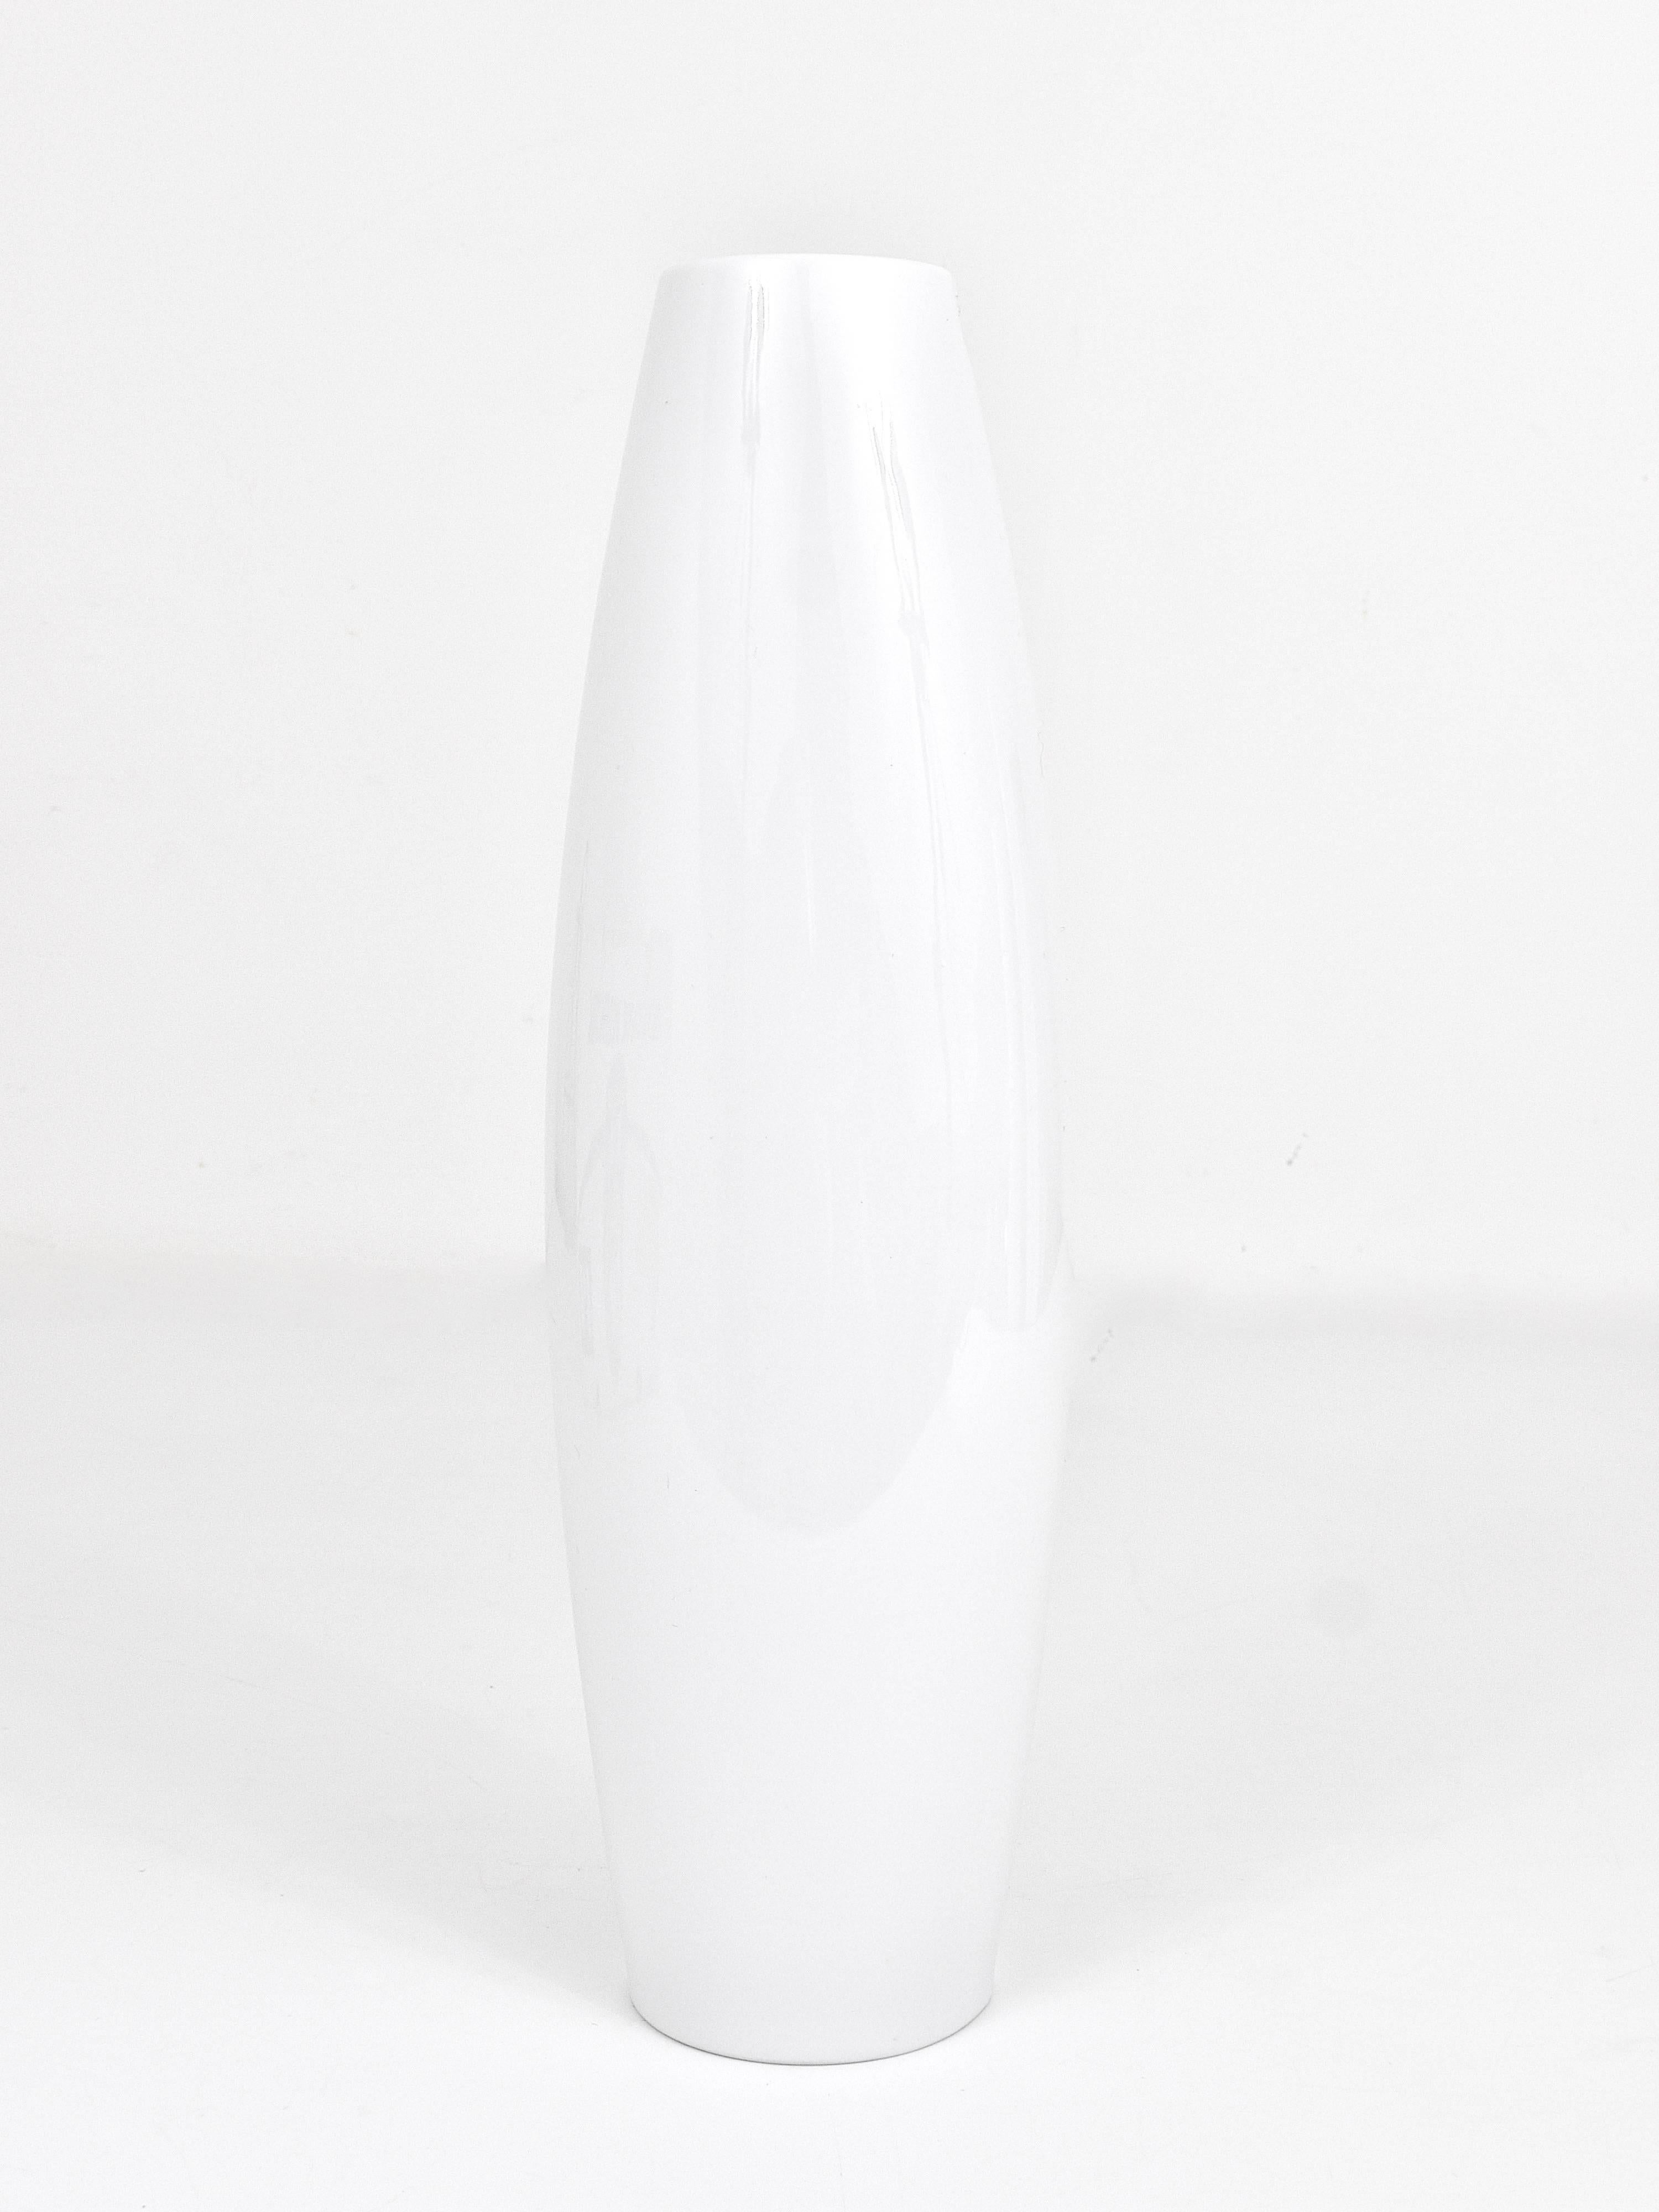 Cuno Fischer Rosenthal Studio-Linie White Relief Op Art Porcelain Vase, 1960s In Good Condition For Sale In Vienna, AT